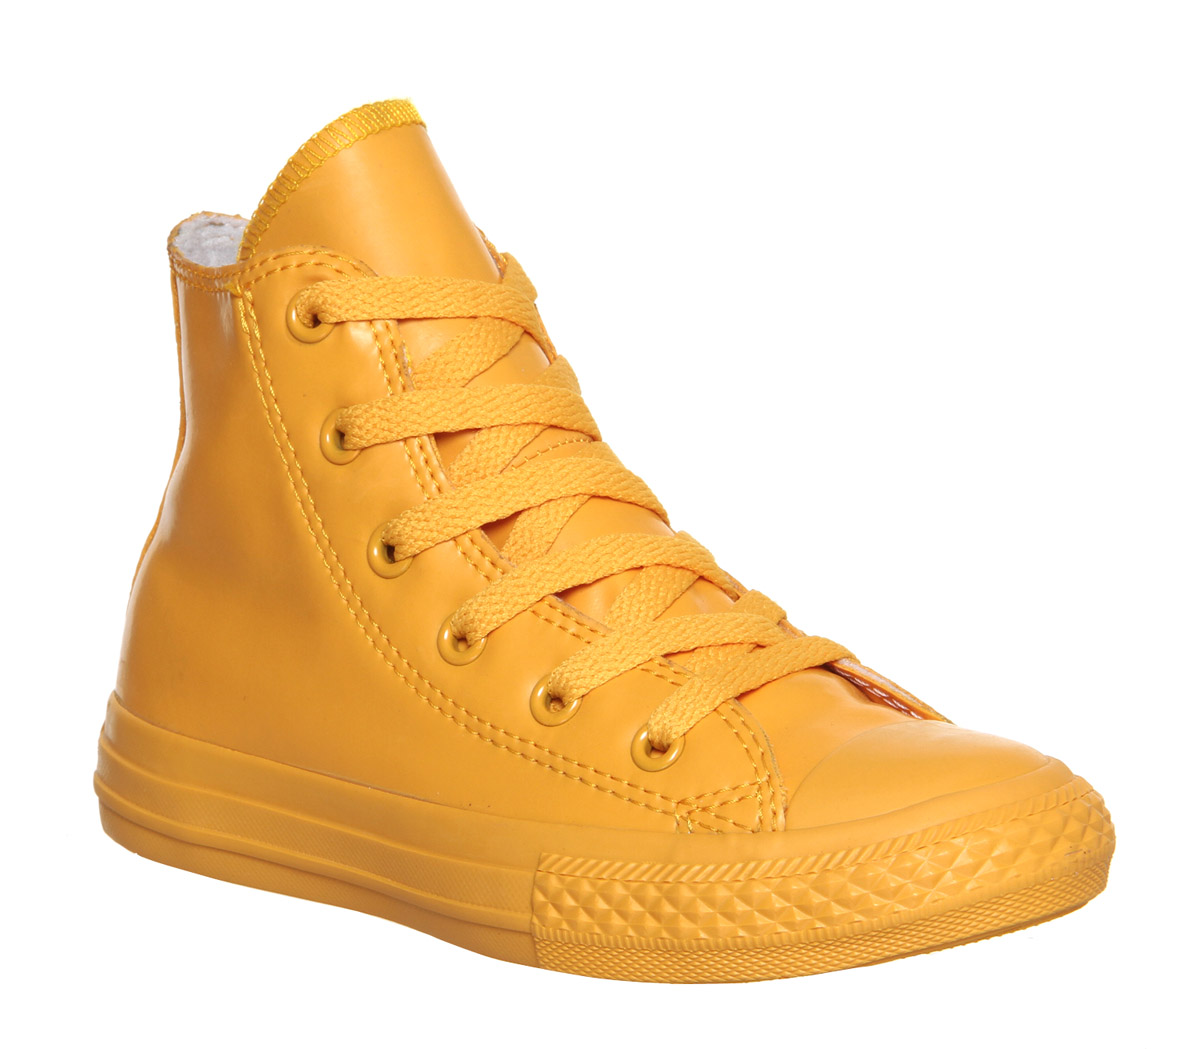 converse high tops mustard yellow